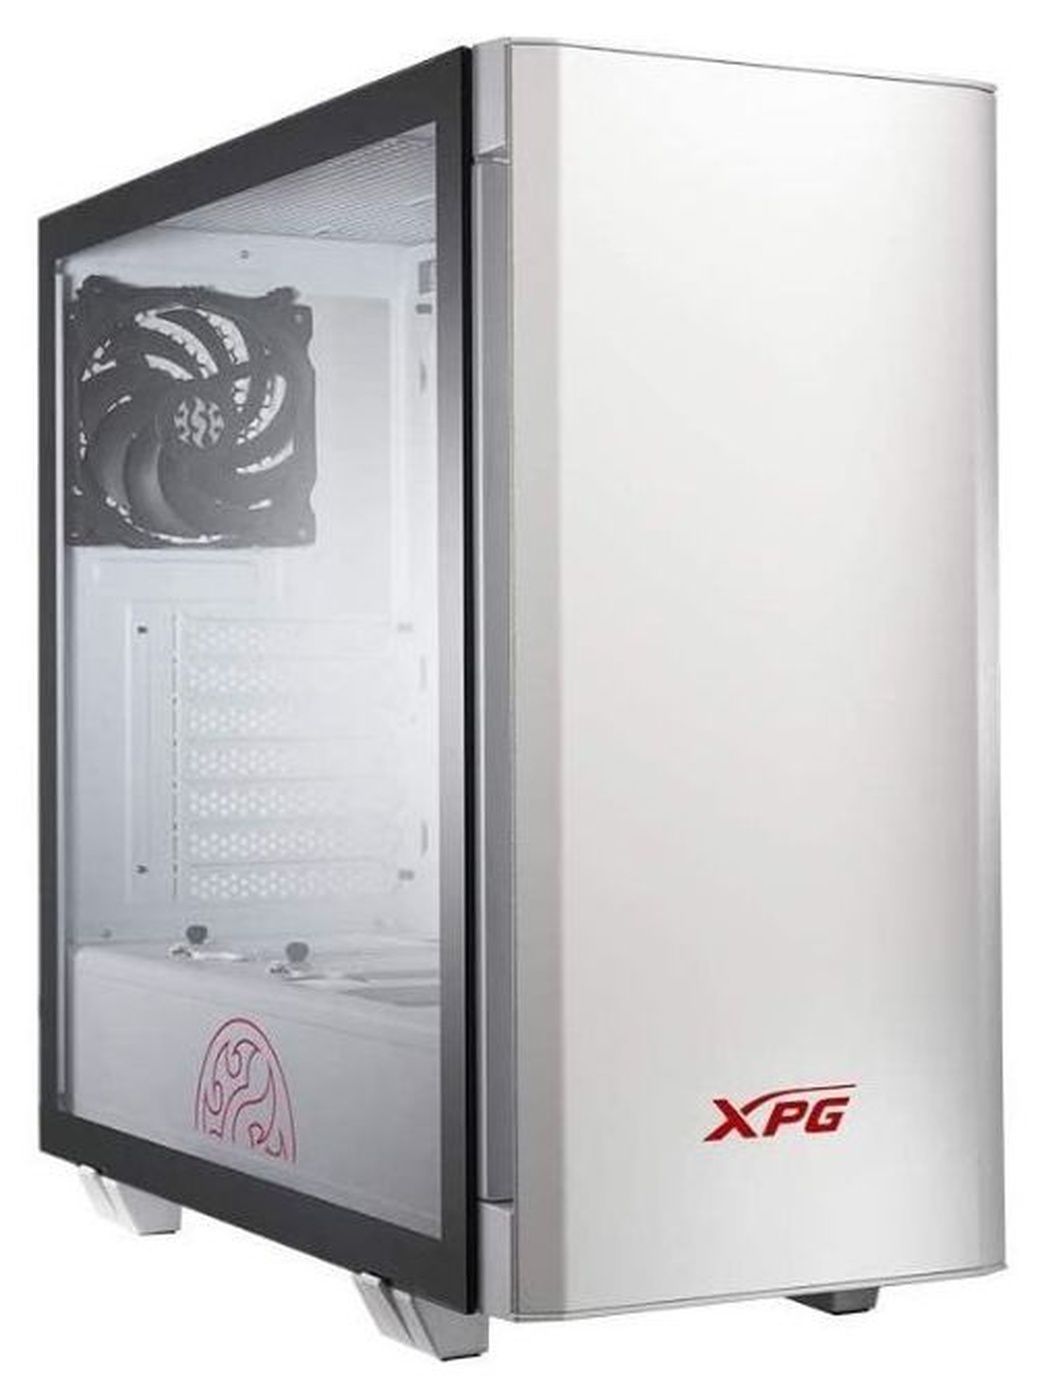 Компьютерный корпус XPG INVADER, белый фото